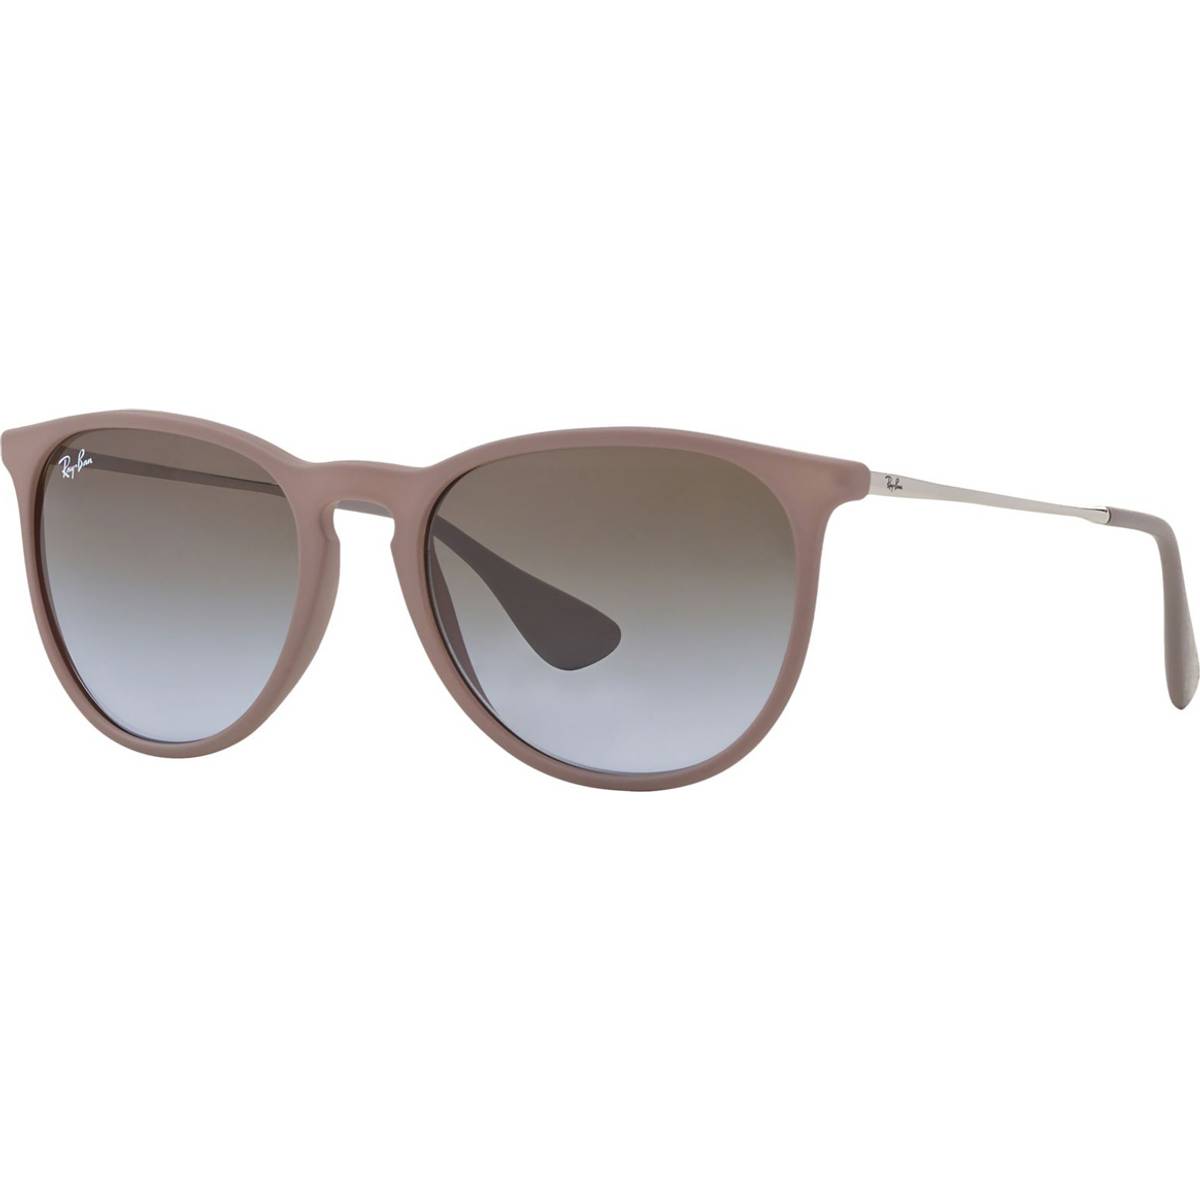 Sand solglasögon • Hitta det lägsta priset hos PriceRunner nu »